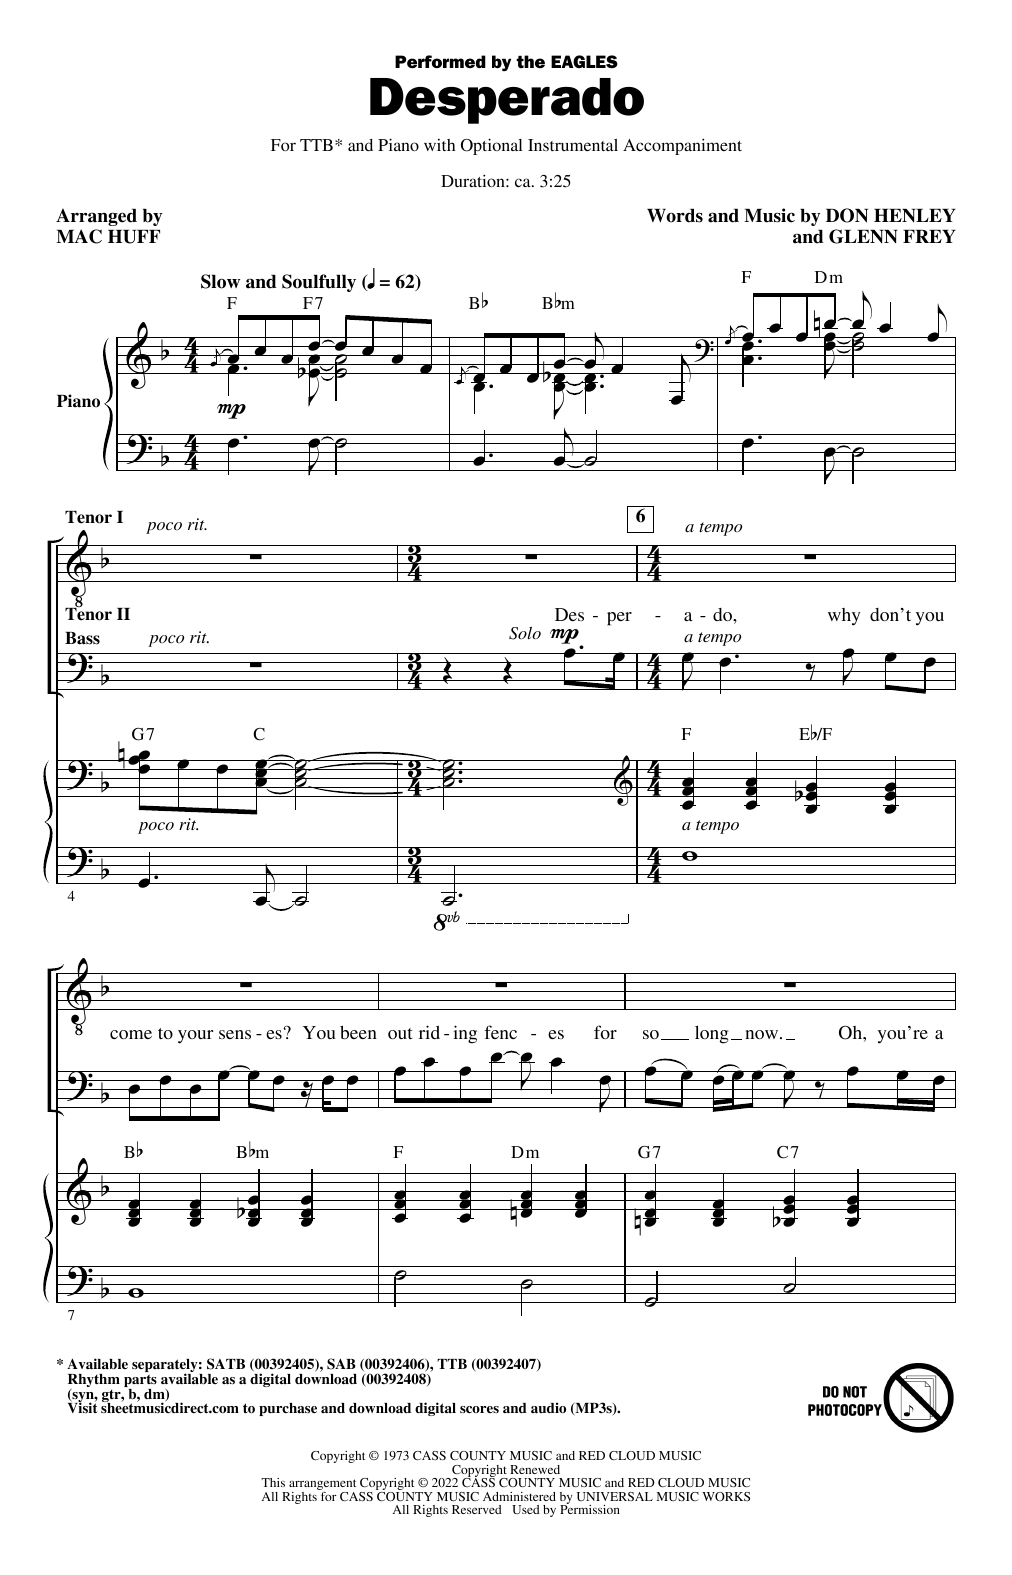 Eagles Desperado (arr. Mac Huff) sheet music notes and chords. Download Printable PDF.